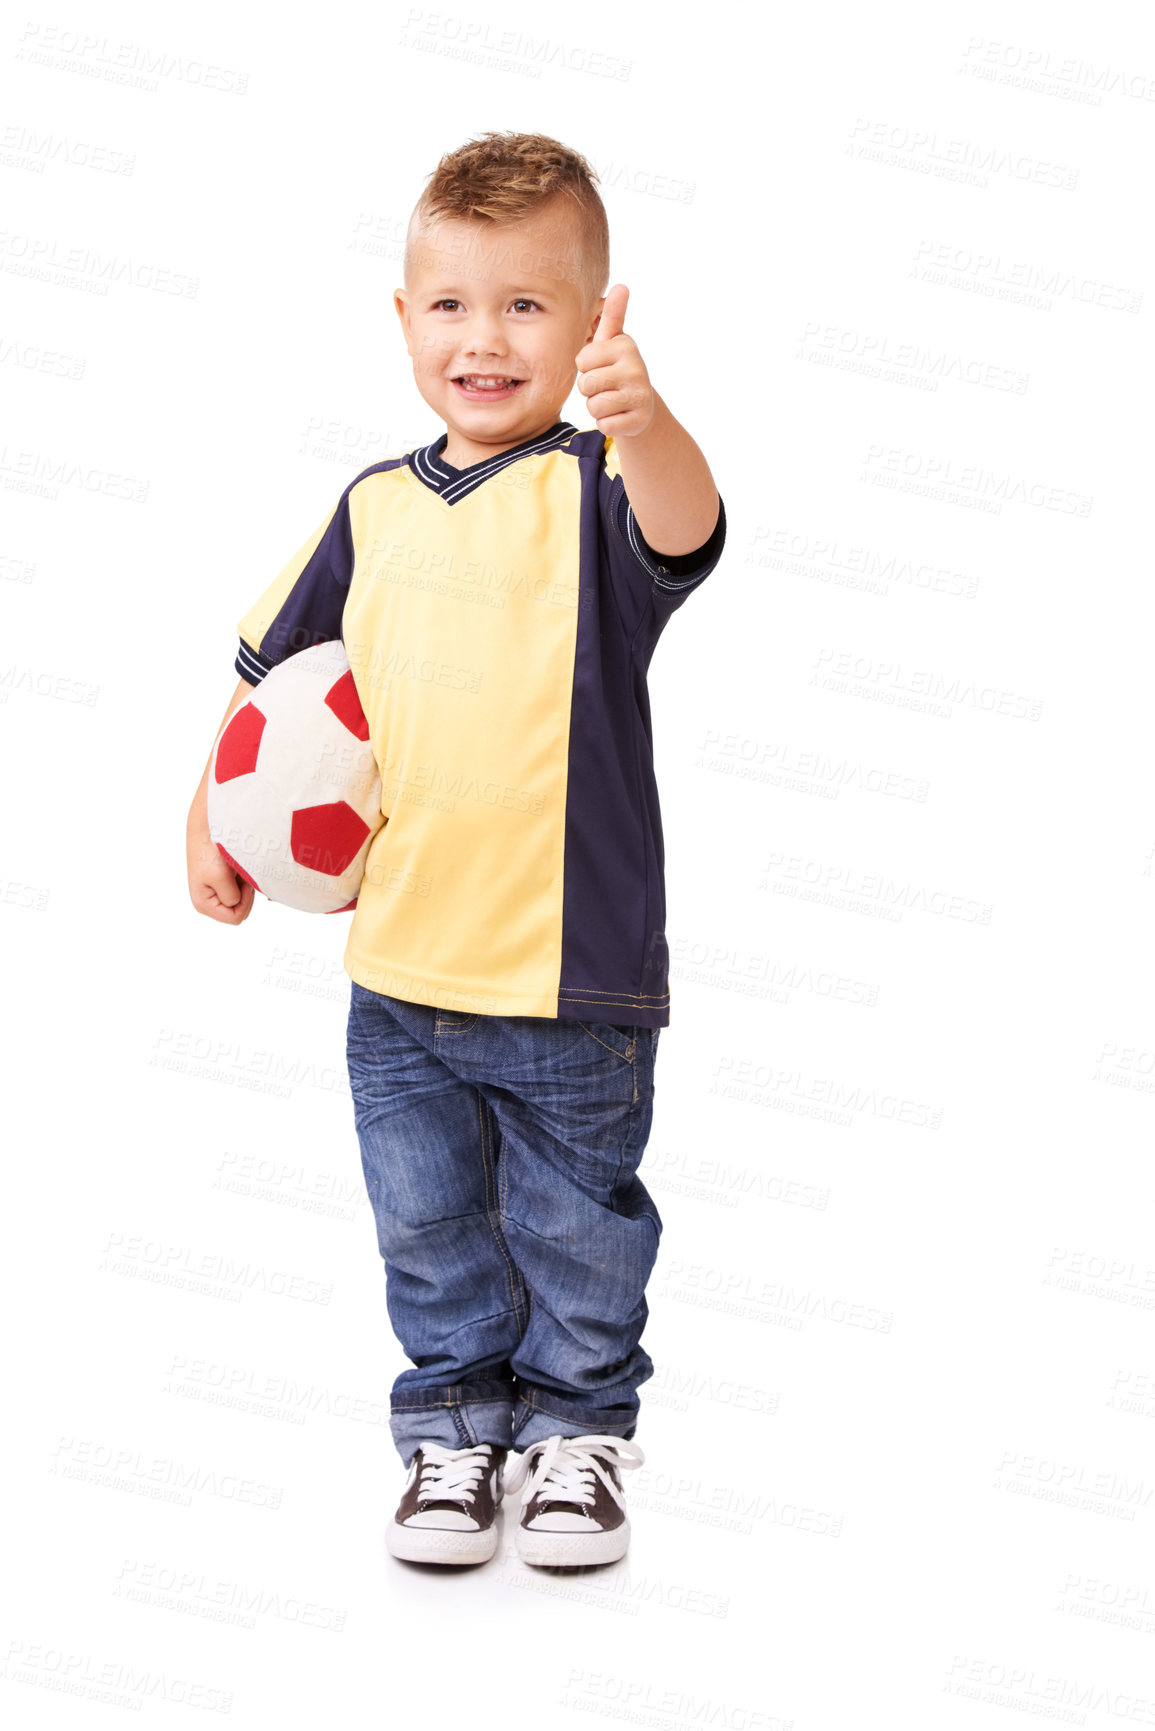 Buy stock photo Studio shot of an adorable young boy carrying a soccer ball